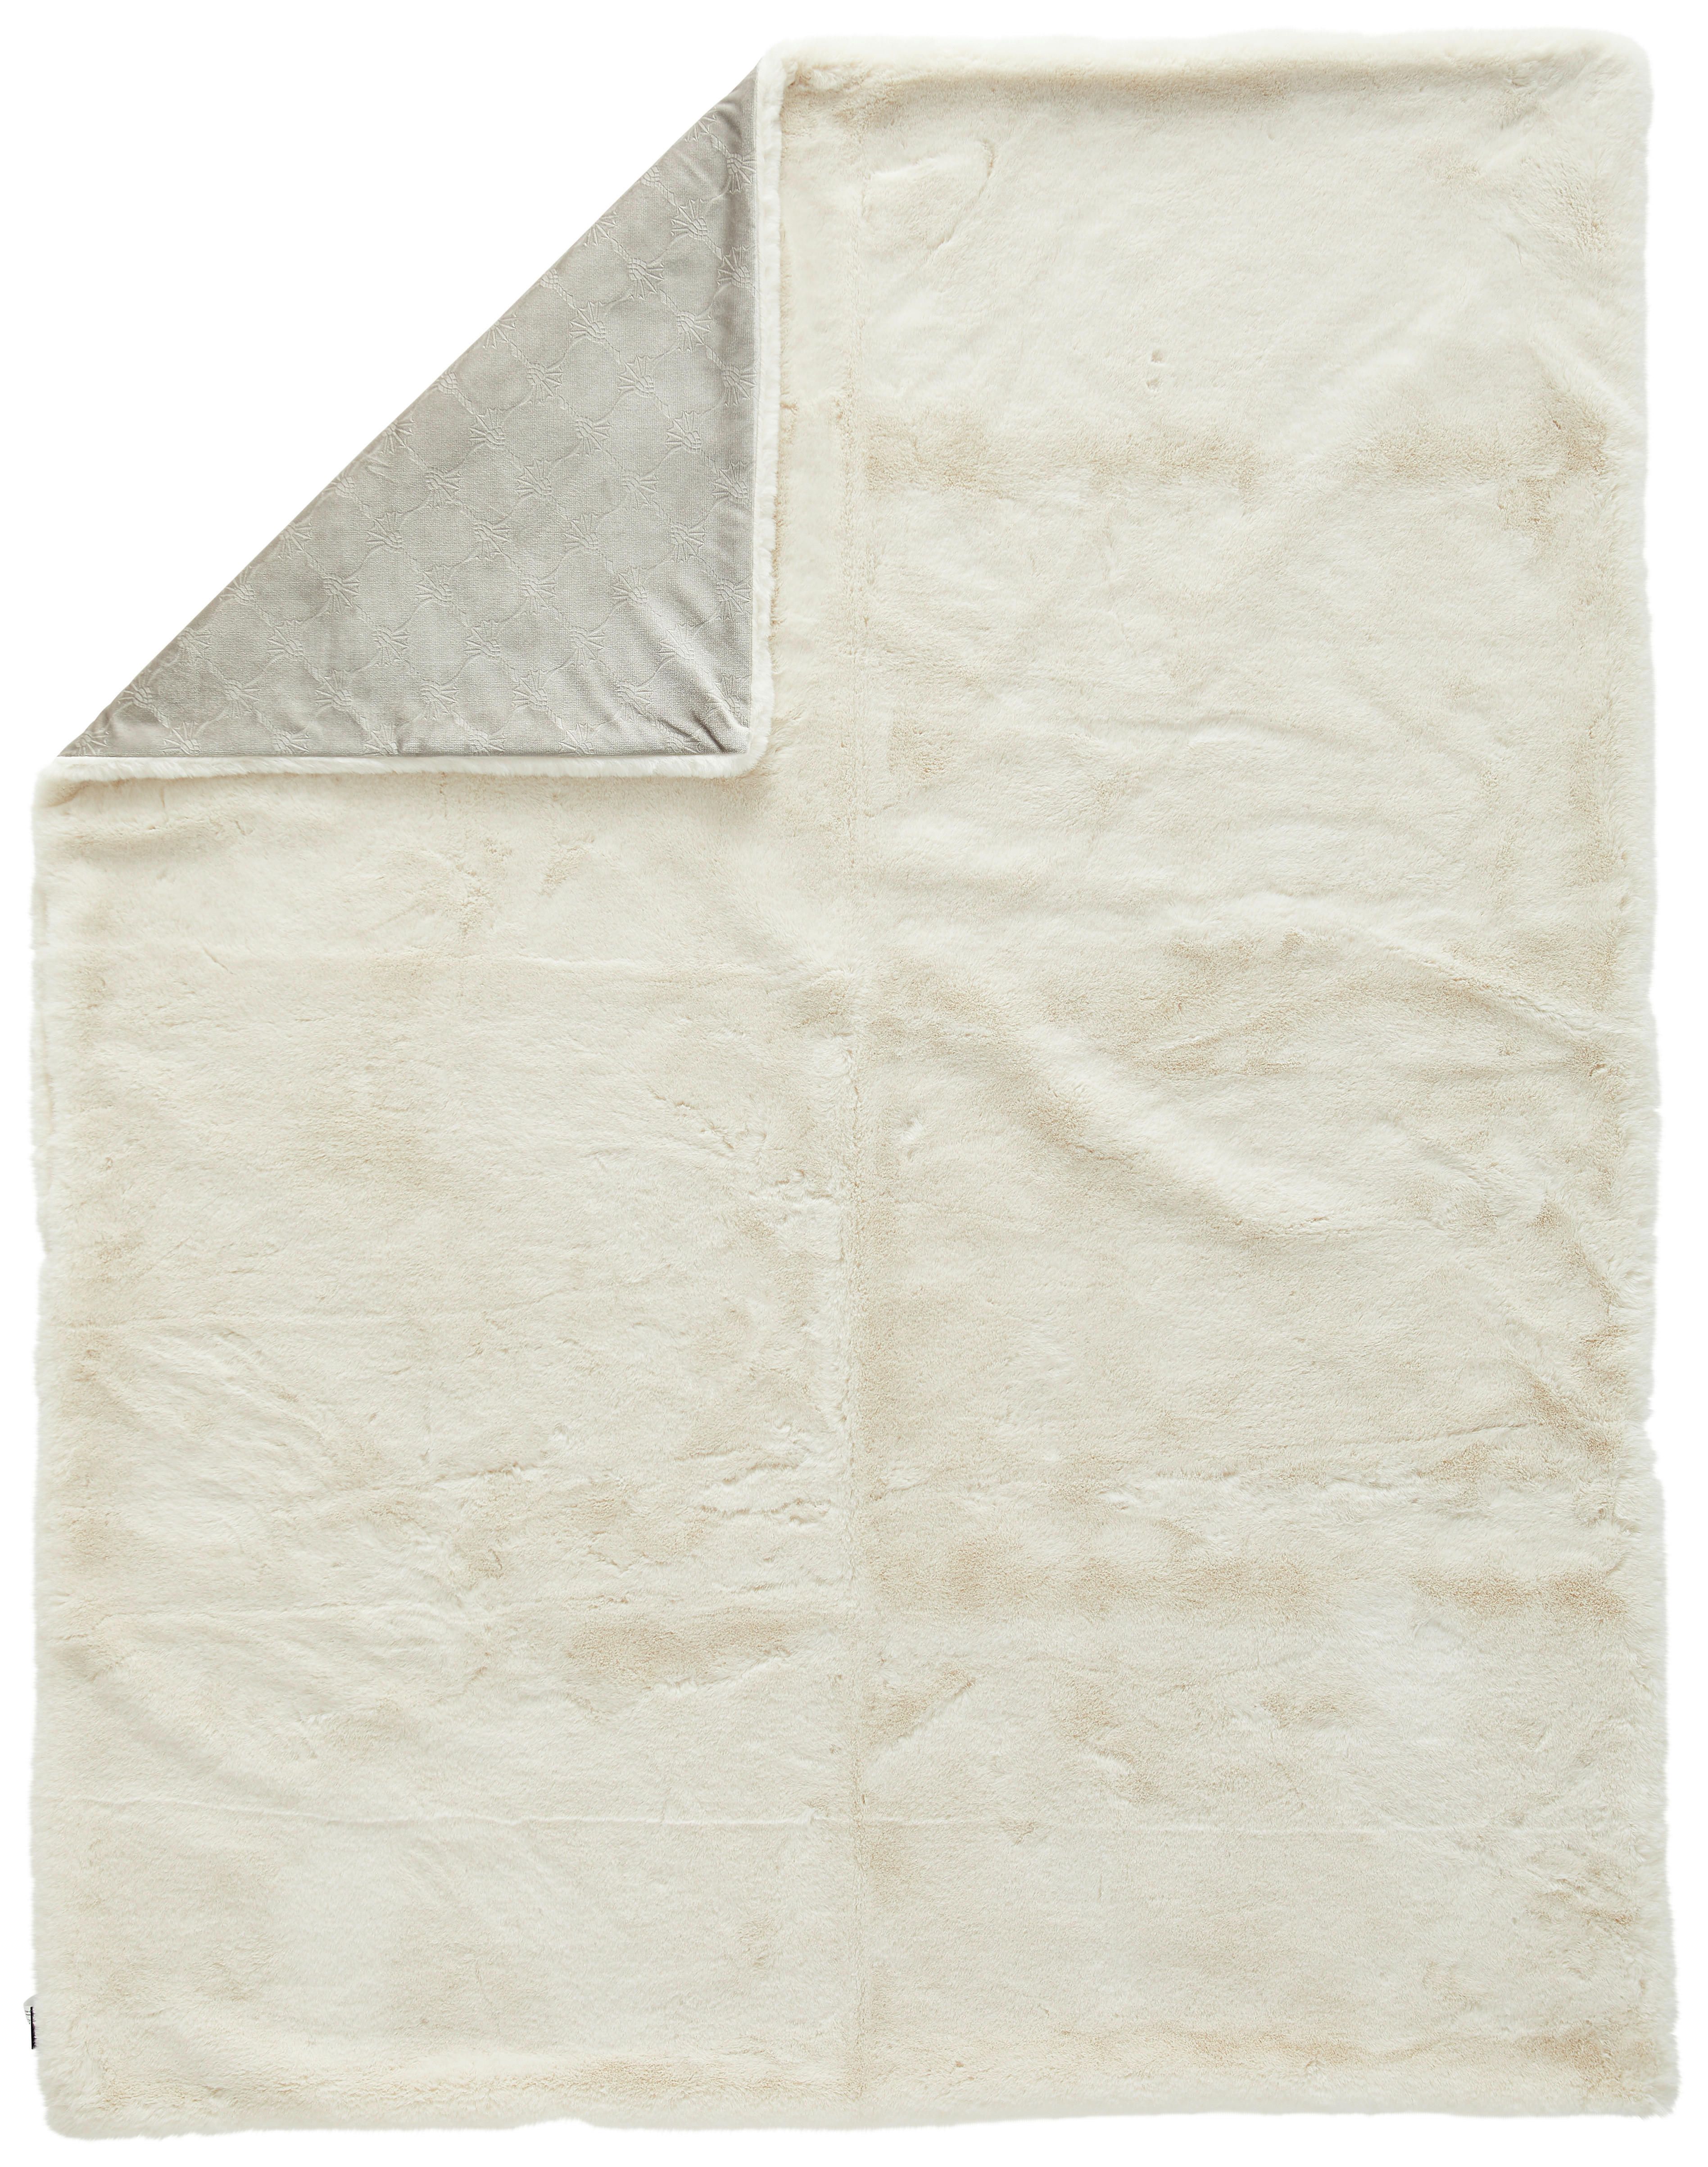 PLAID Smooth 130/170 cm  - Creme/Weiß, Design, Textil (130/170cm) - Joop!